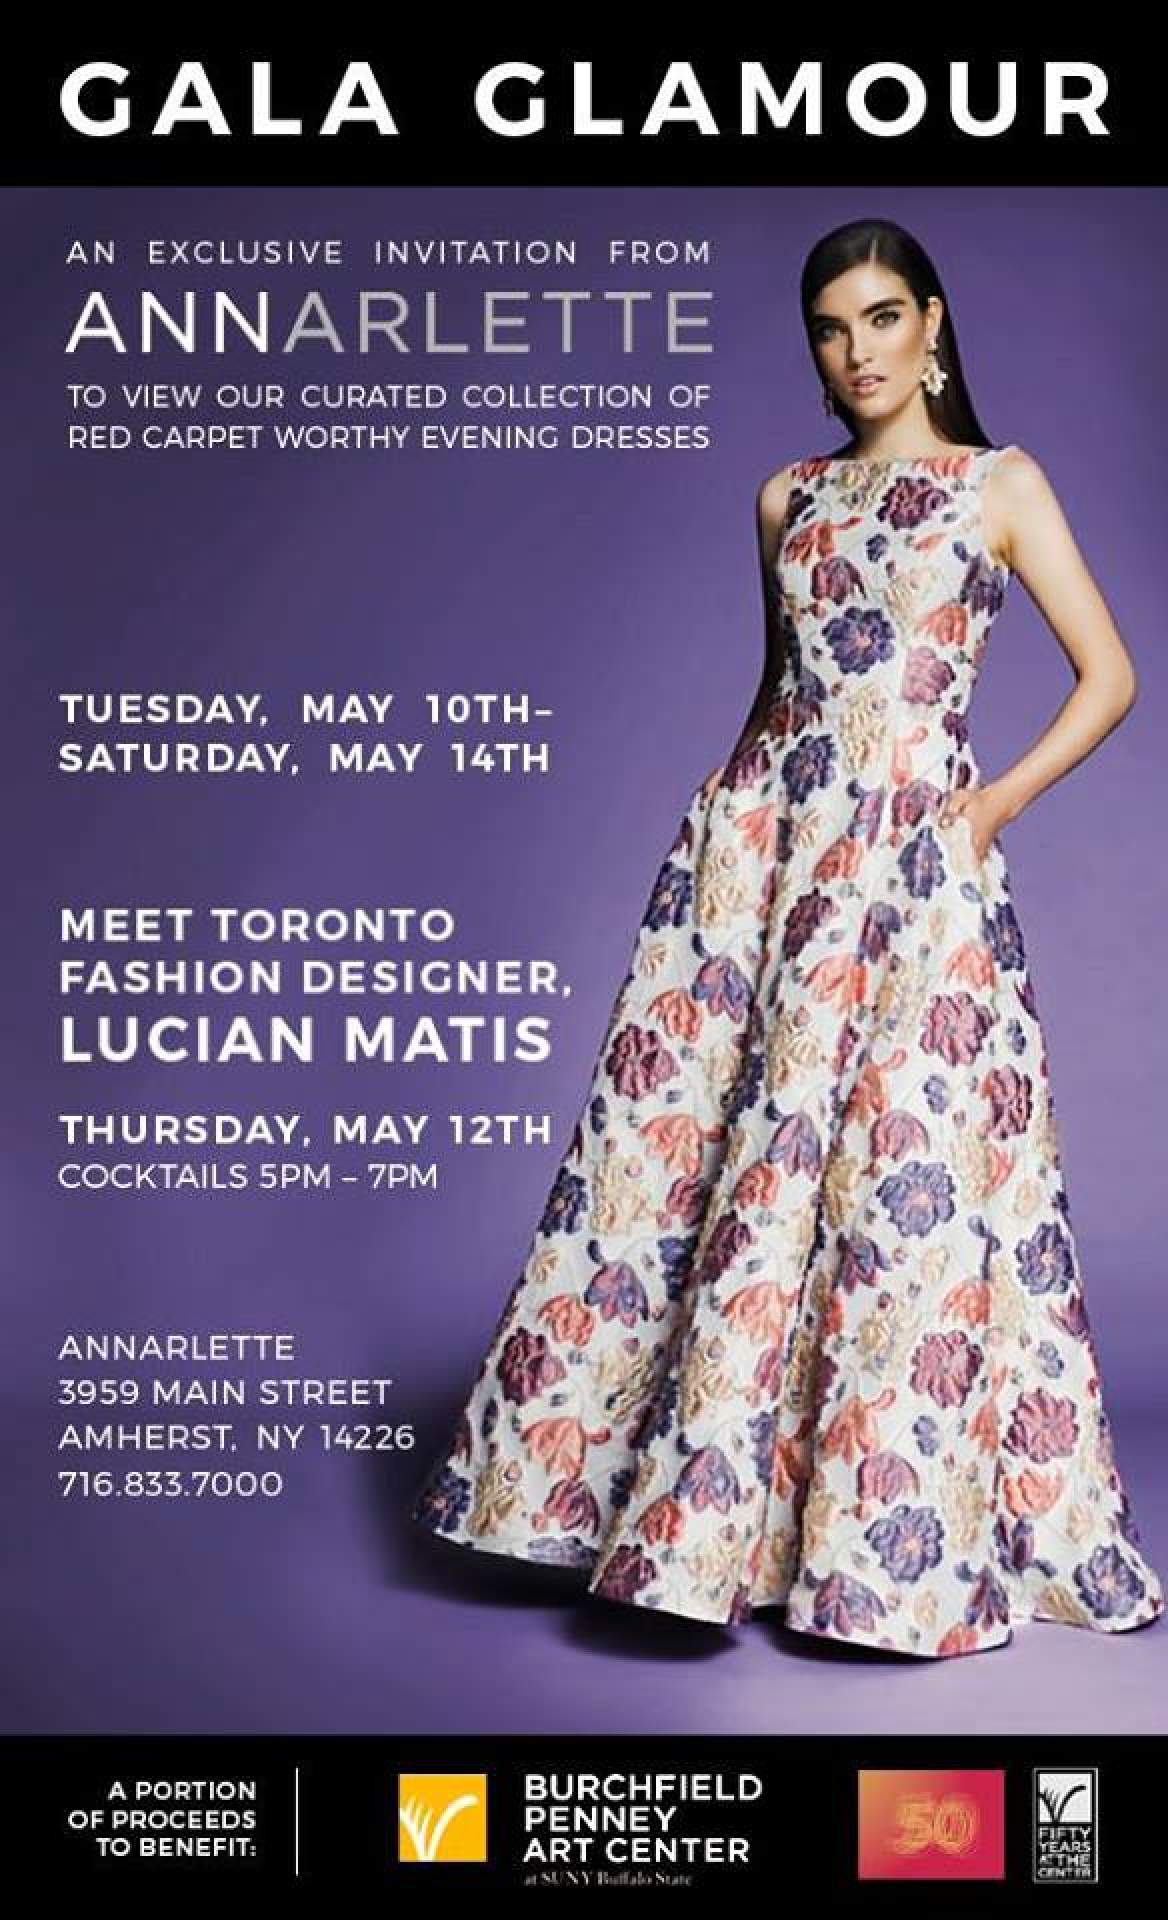 Meet Toronto fashion designer, LUCIAN MATIS at ANNARLETTE